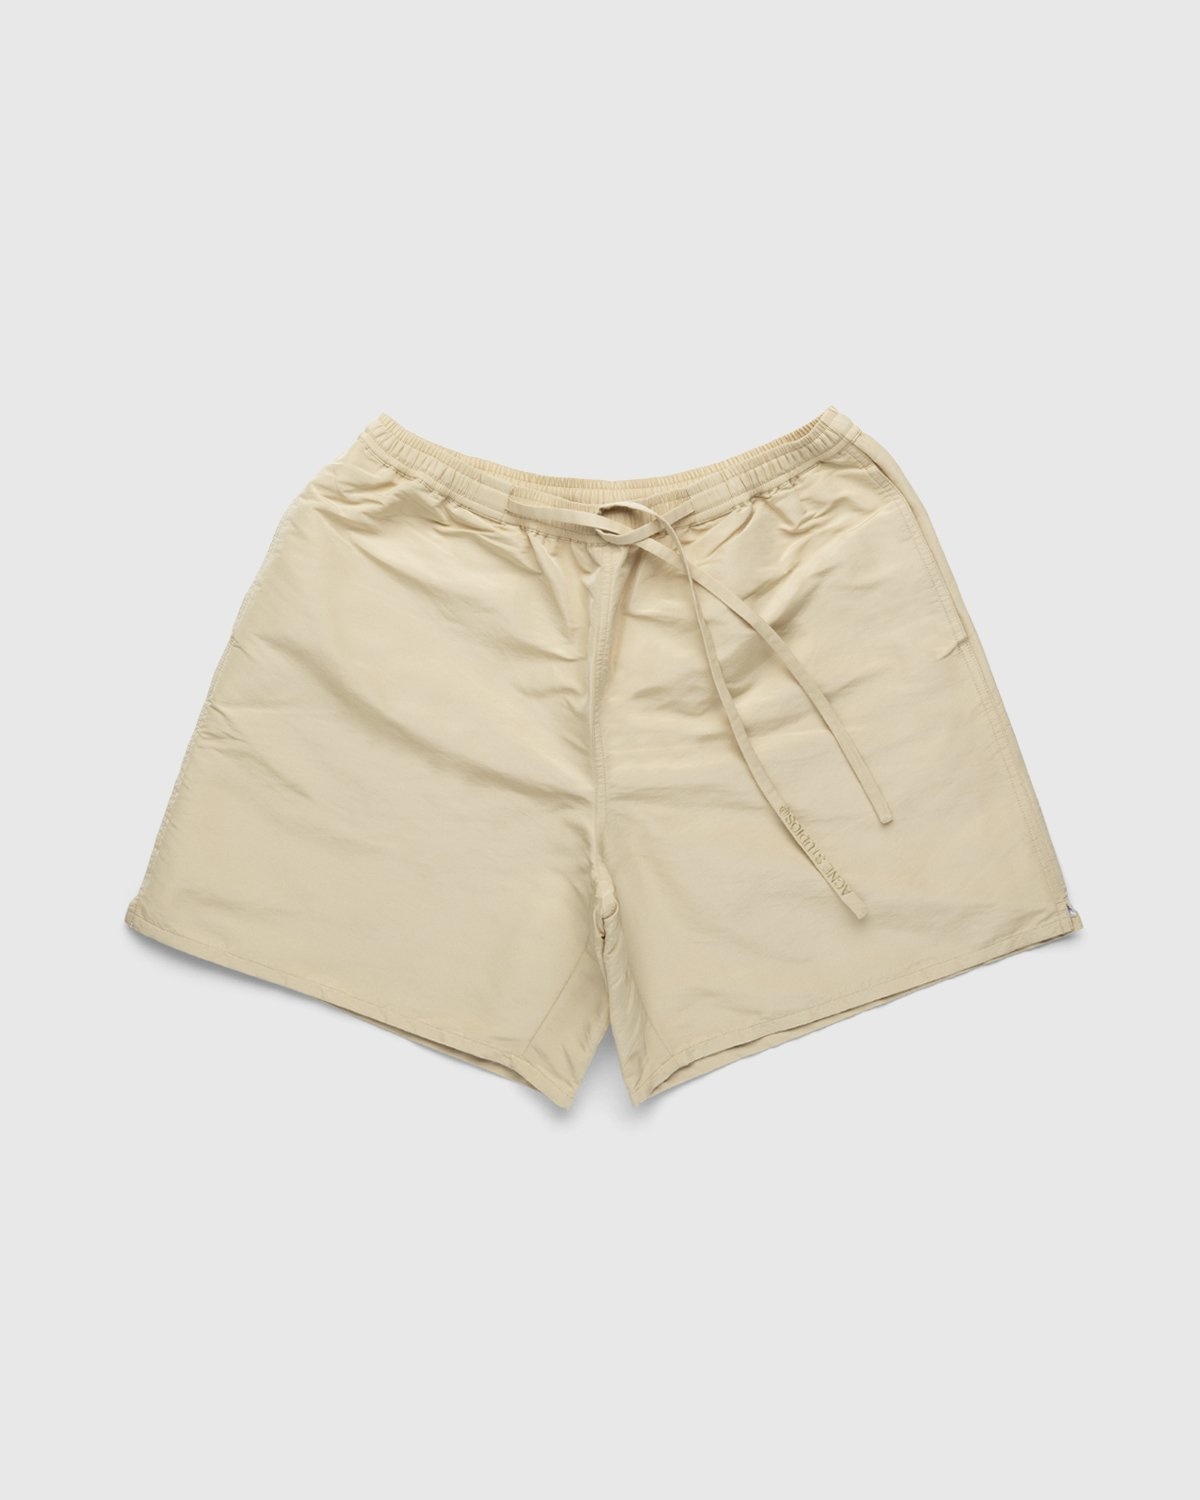 Acne Studios – Taffeta Shorts Sand Beige - Active Shorts - Beige - Image 1